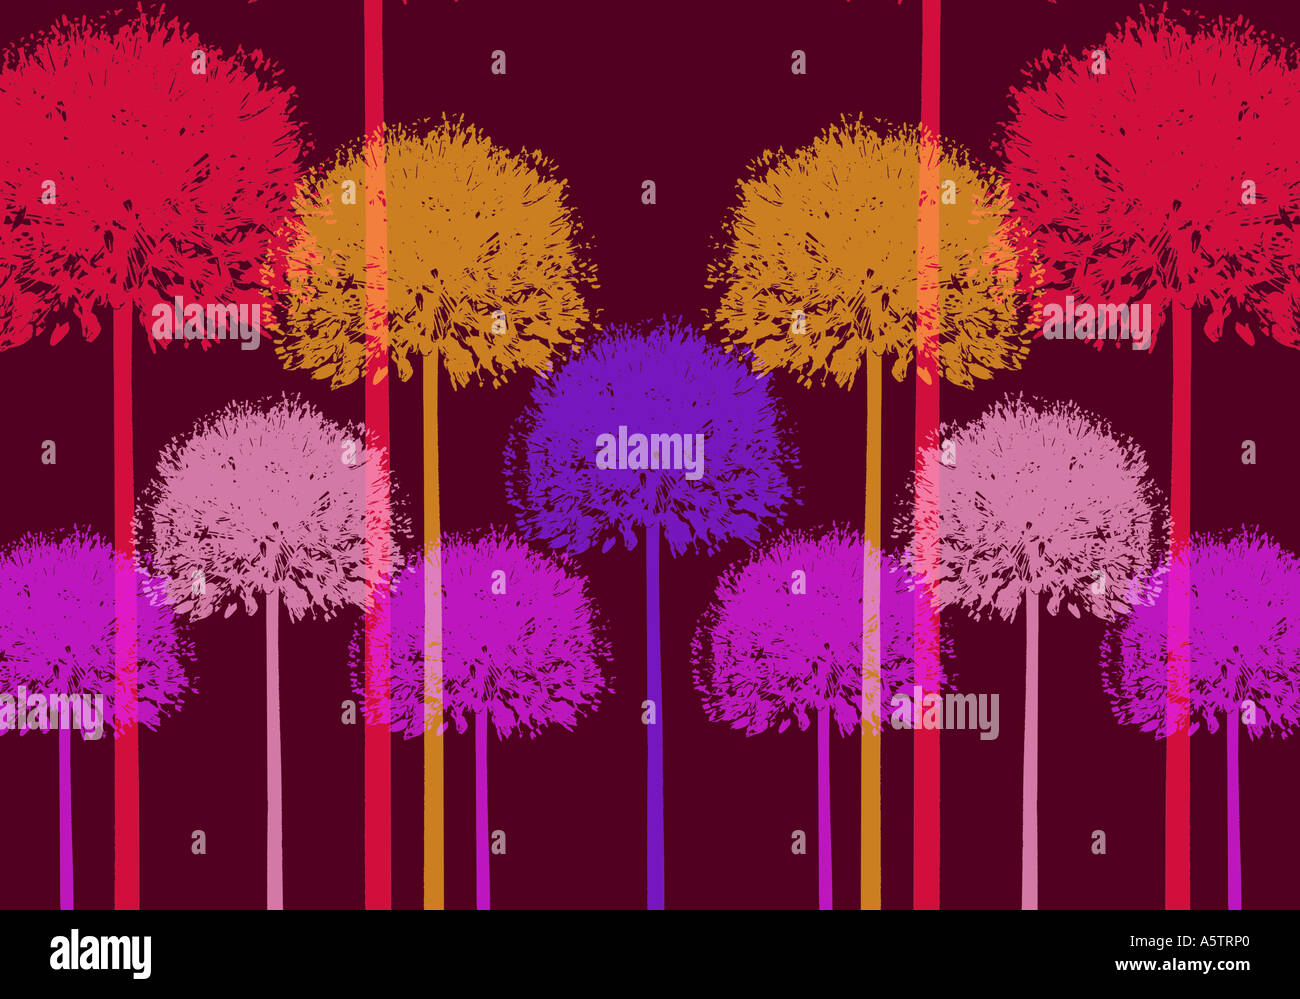 Graphic pattern - Allium illustration Stock Photo